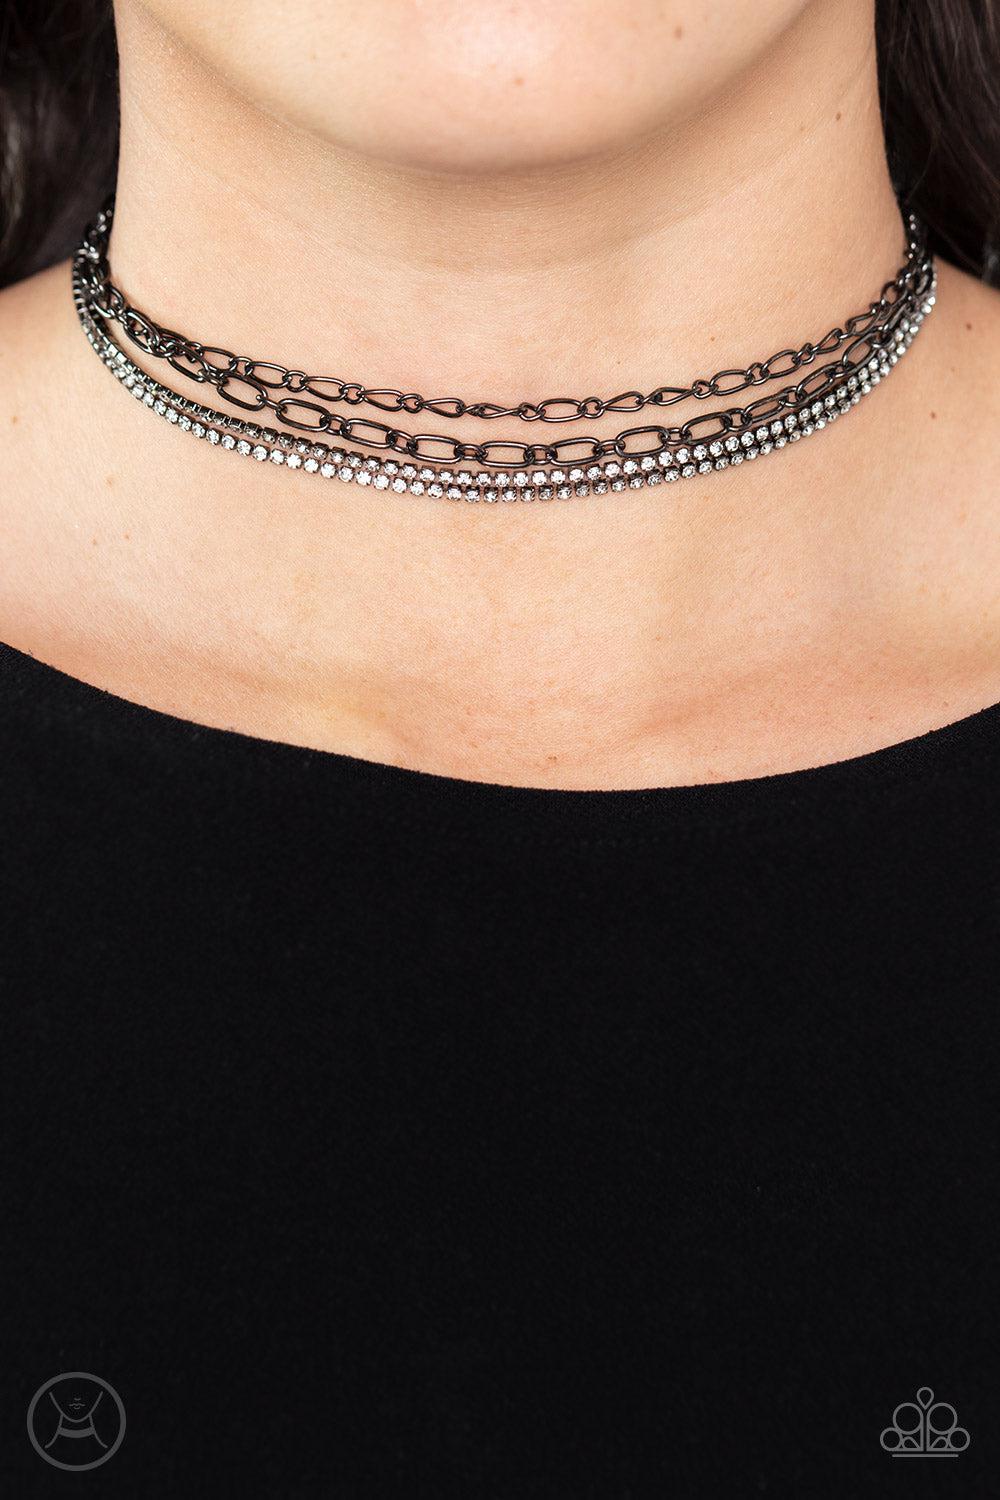 Glitter and Gossip Gunmetal Black Choker Necklace - Paparazzi Accessories-on model - CarasShop.com - $5 Jewelry by Cara Jewels